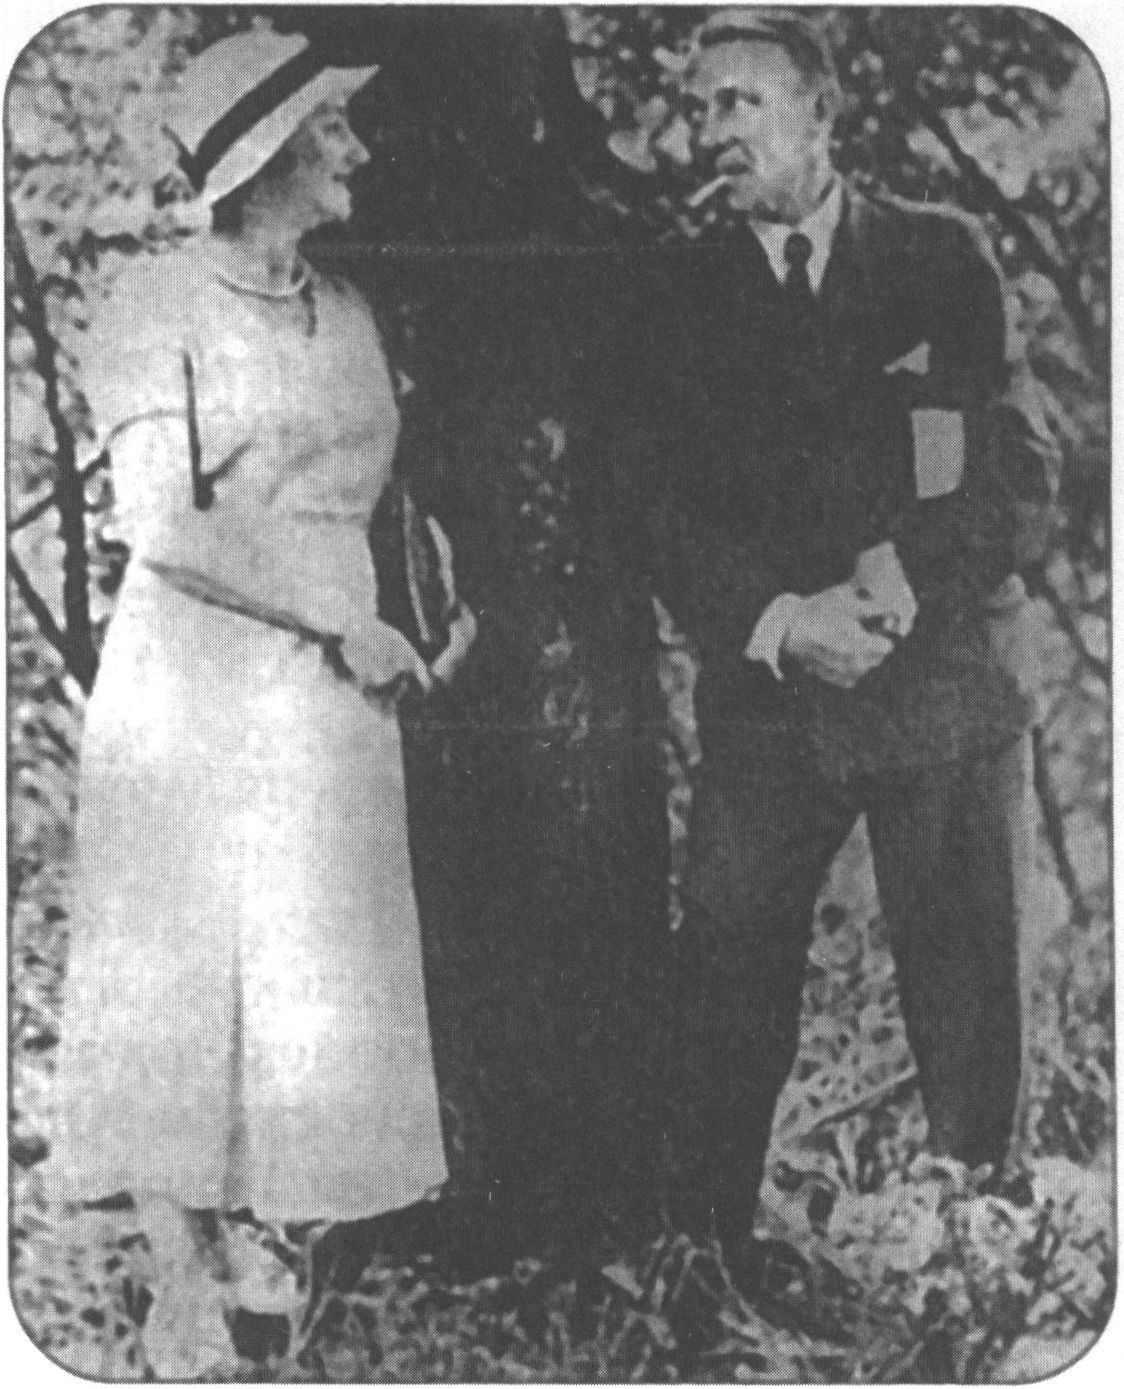 Е.С. Булгакова и М.А. Булгаков. Киев. 1934 г.